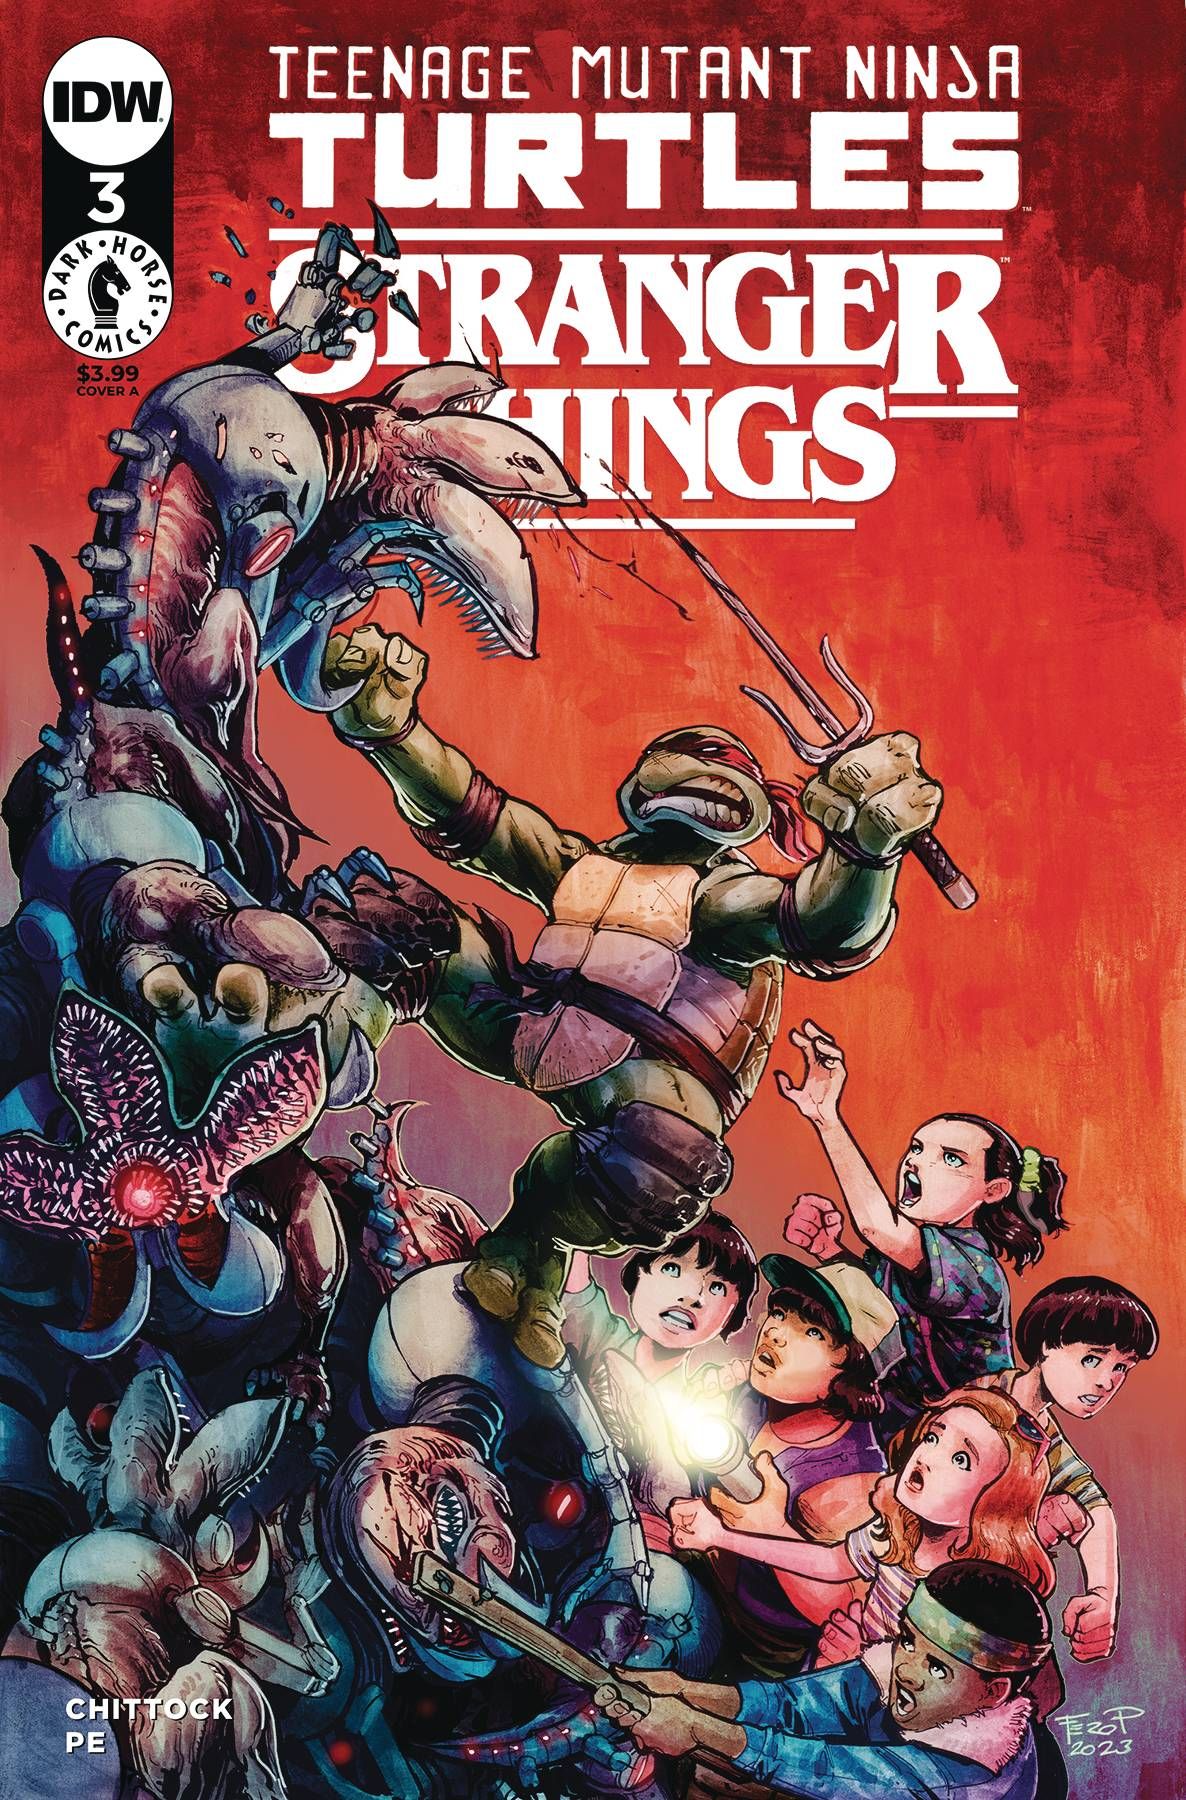 Teenage Mutant Ninja Turtles x Stranger Things #3 Comic